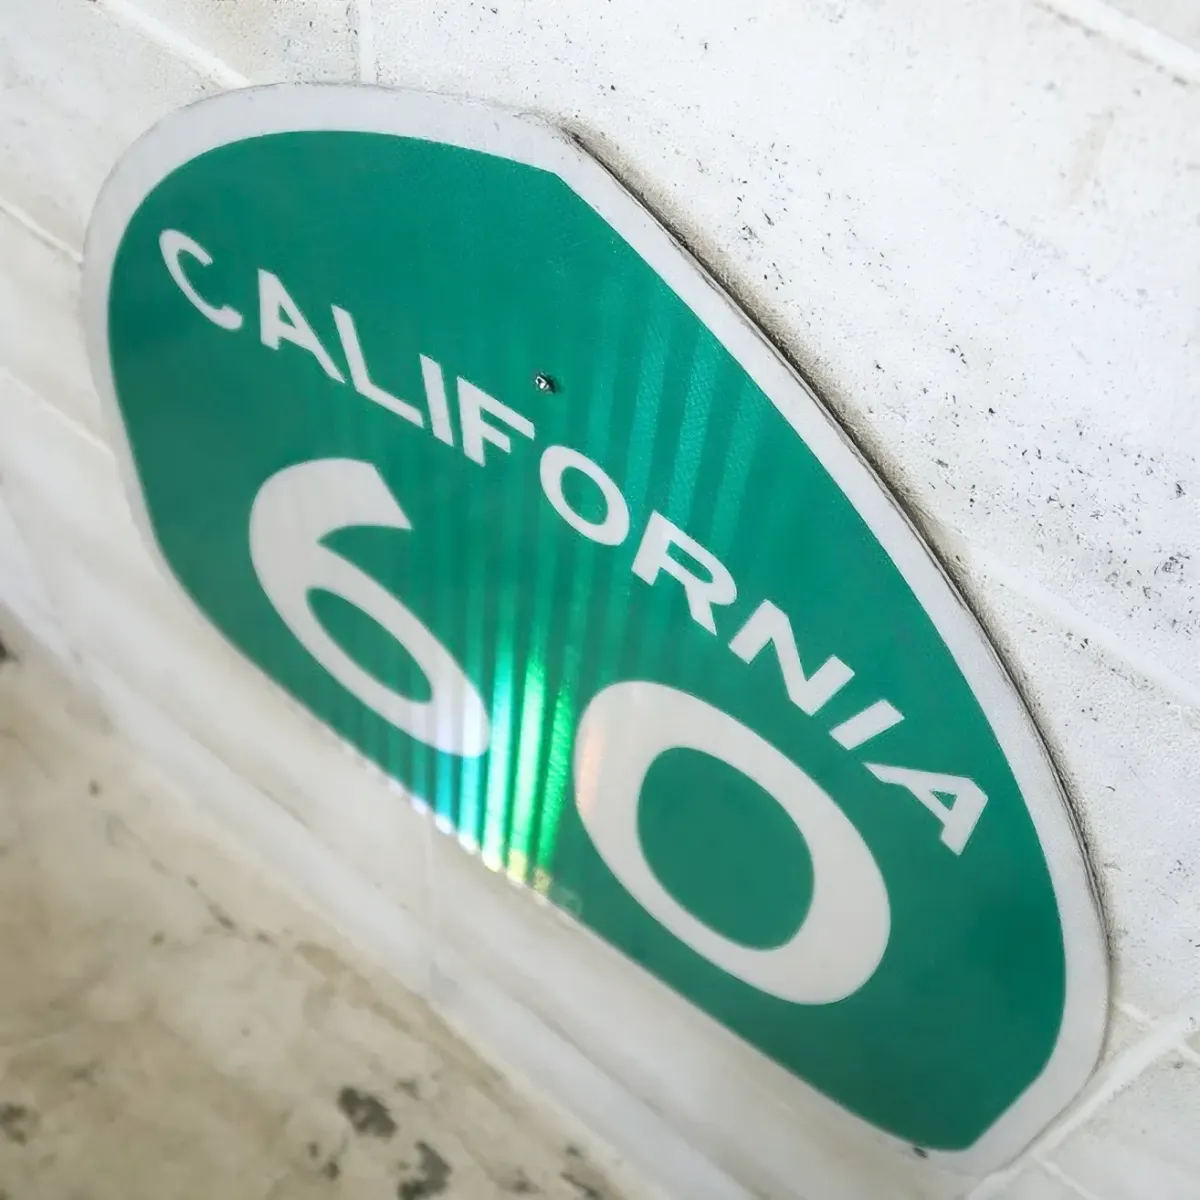 CALIFORNIA 60 ロードサイン